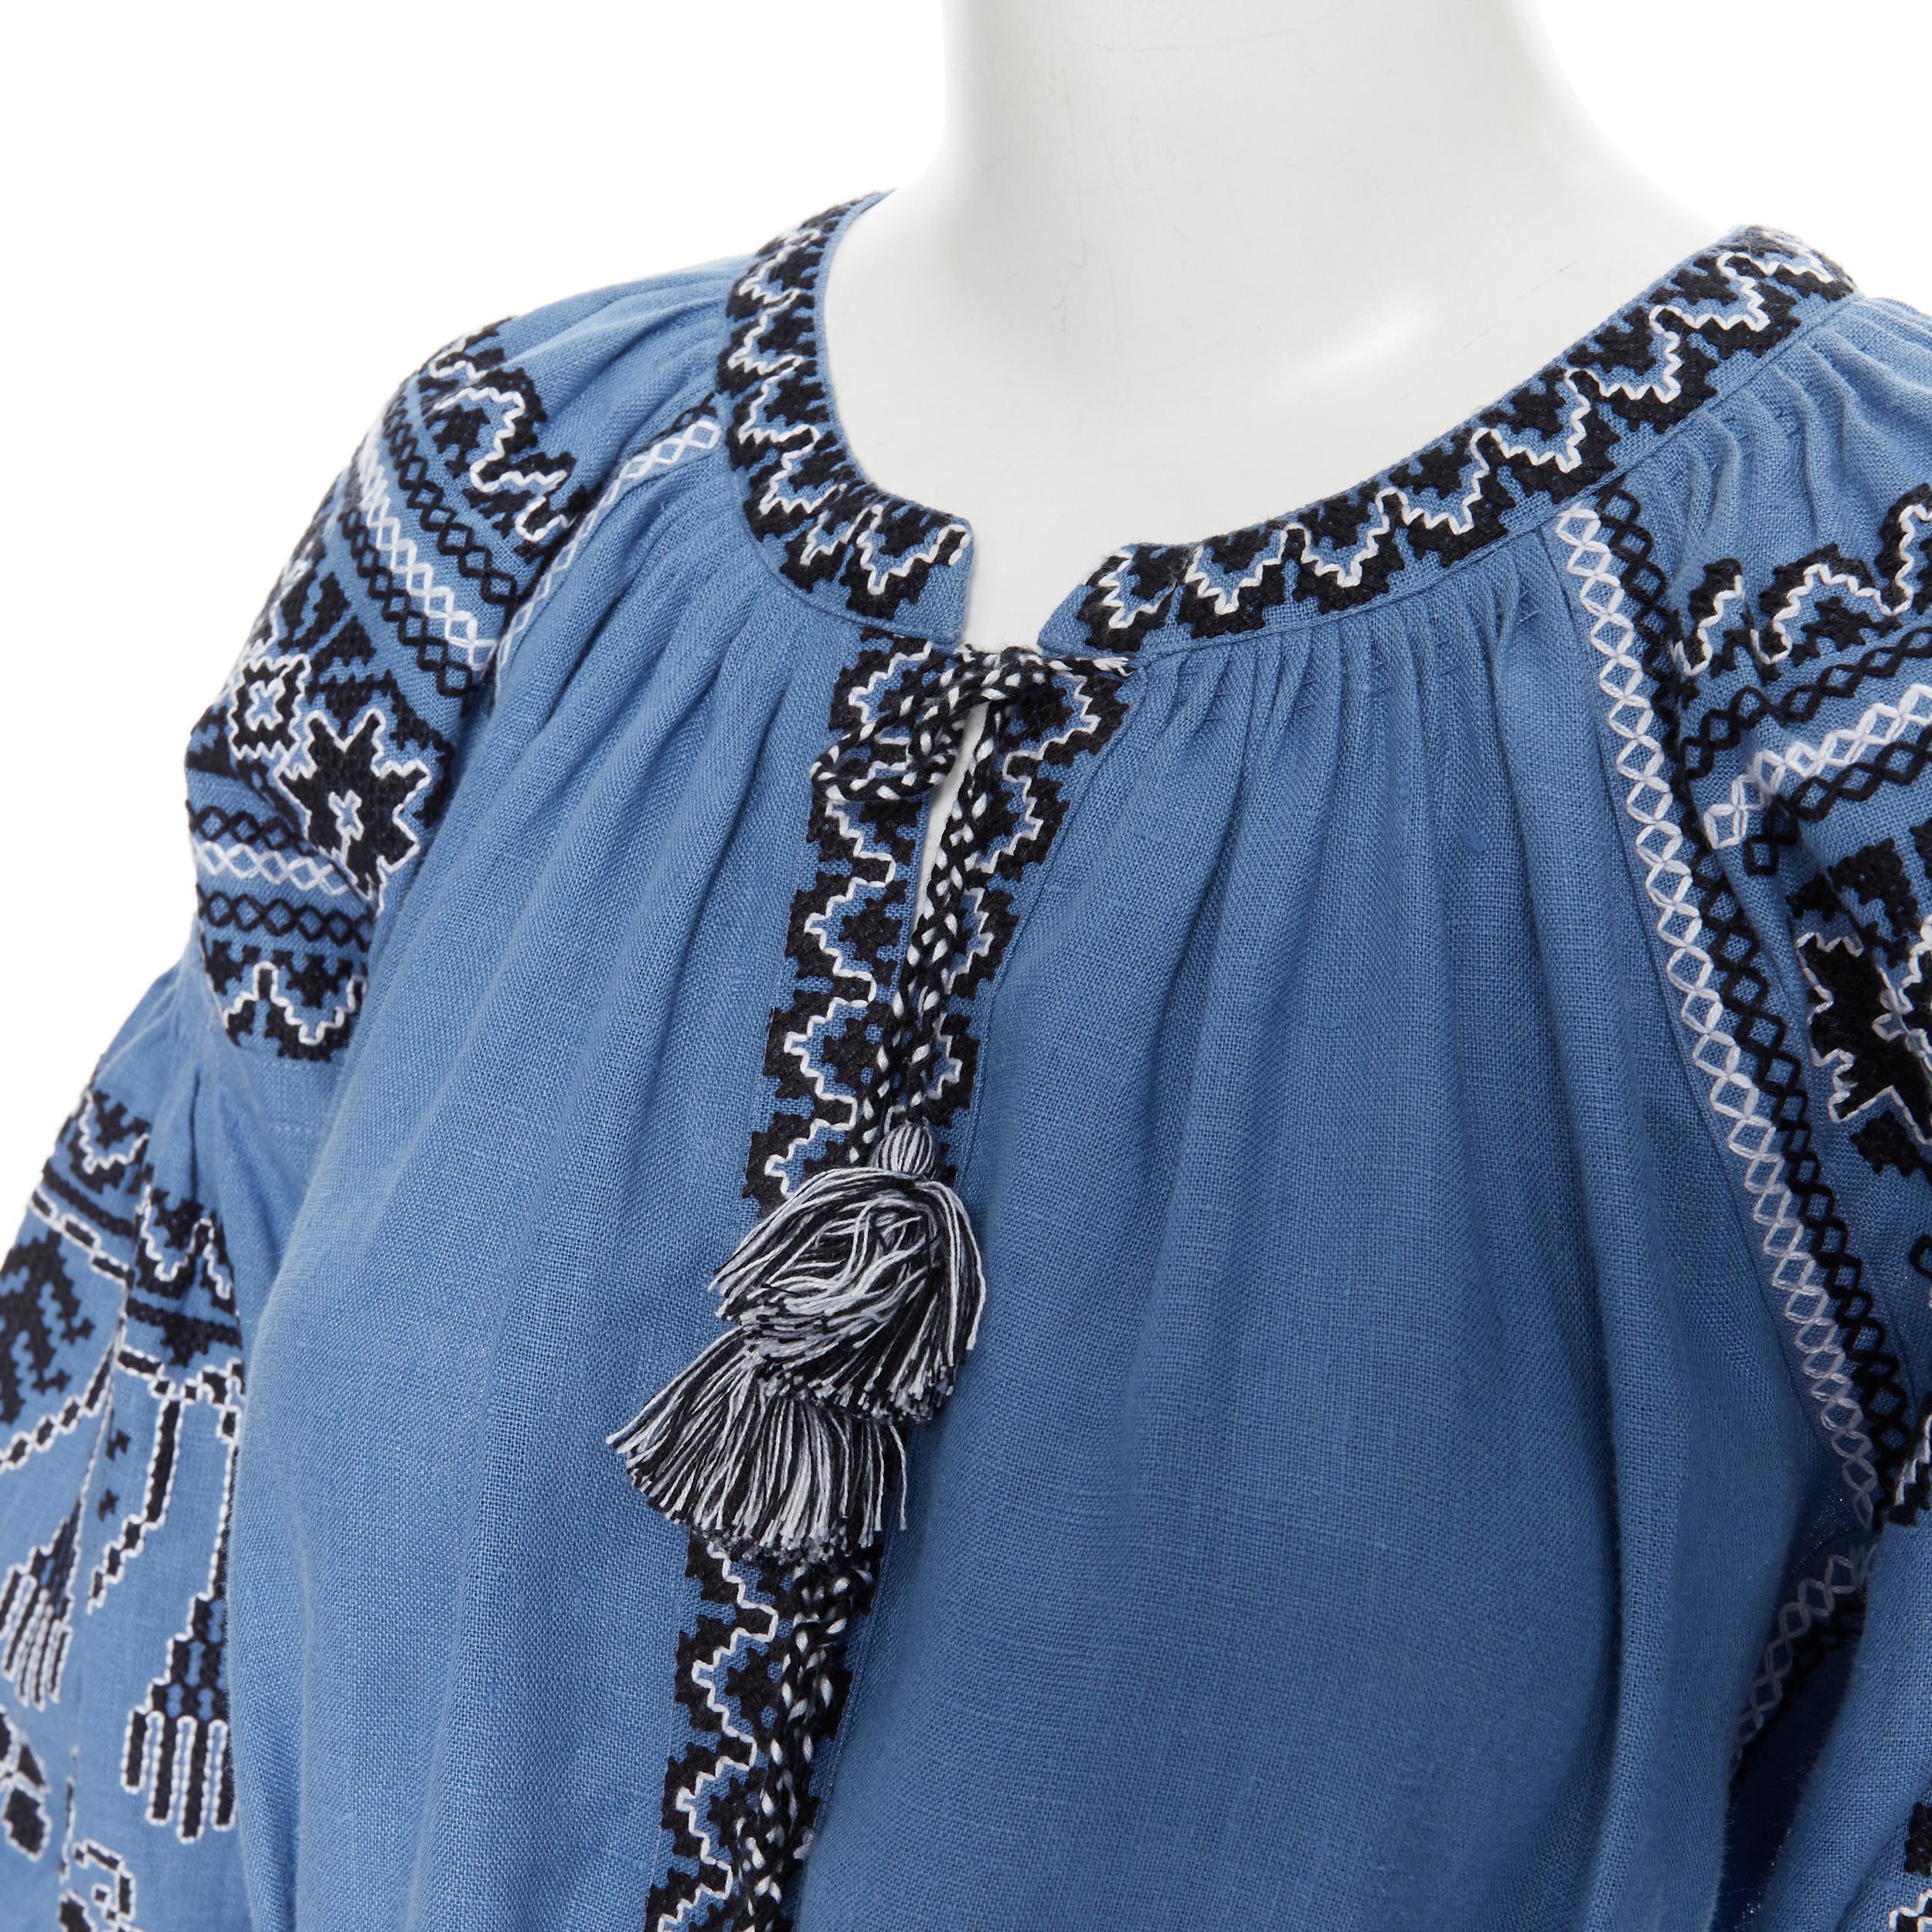 Women's VITA KIN blue linen black white ethnic embroidered puff sleeve belted dress XS